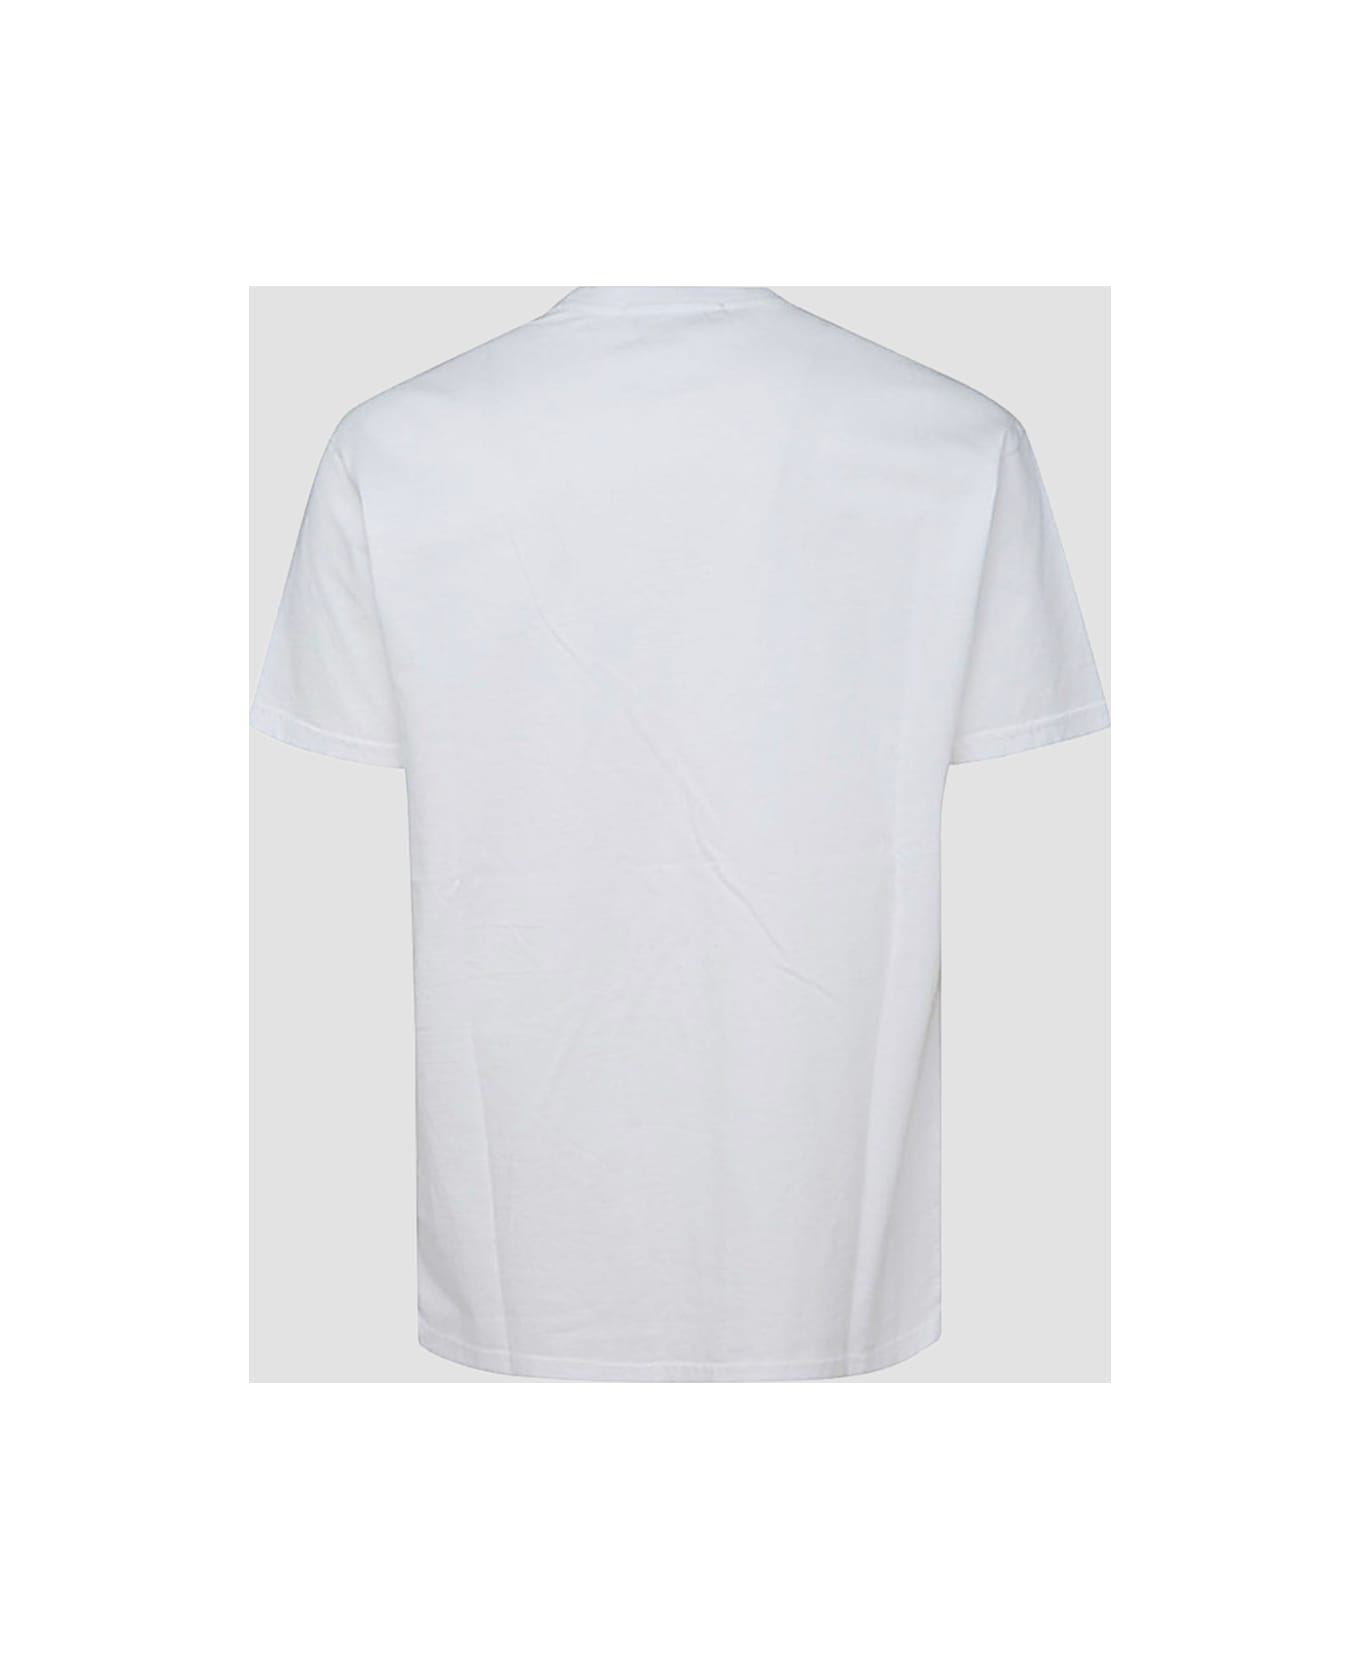 Vivienne Westwood White Cotton T-shirt - White Tシャツ